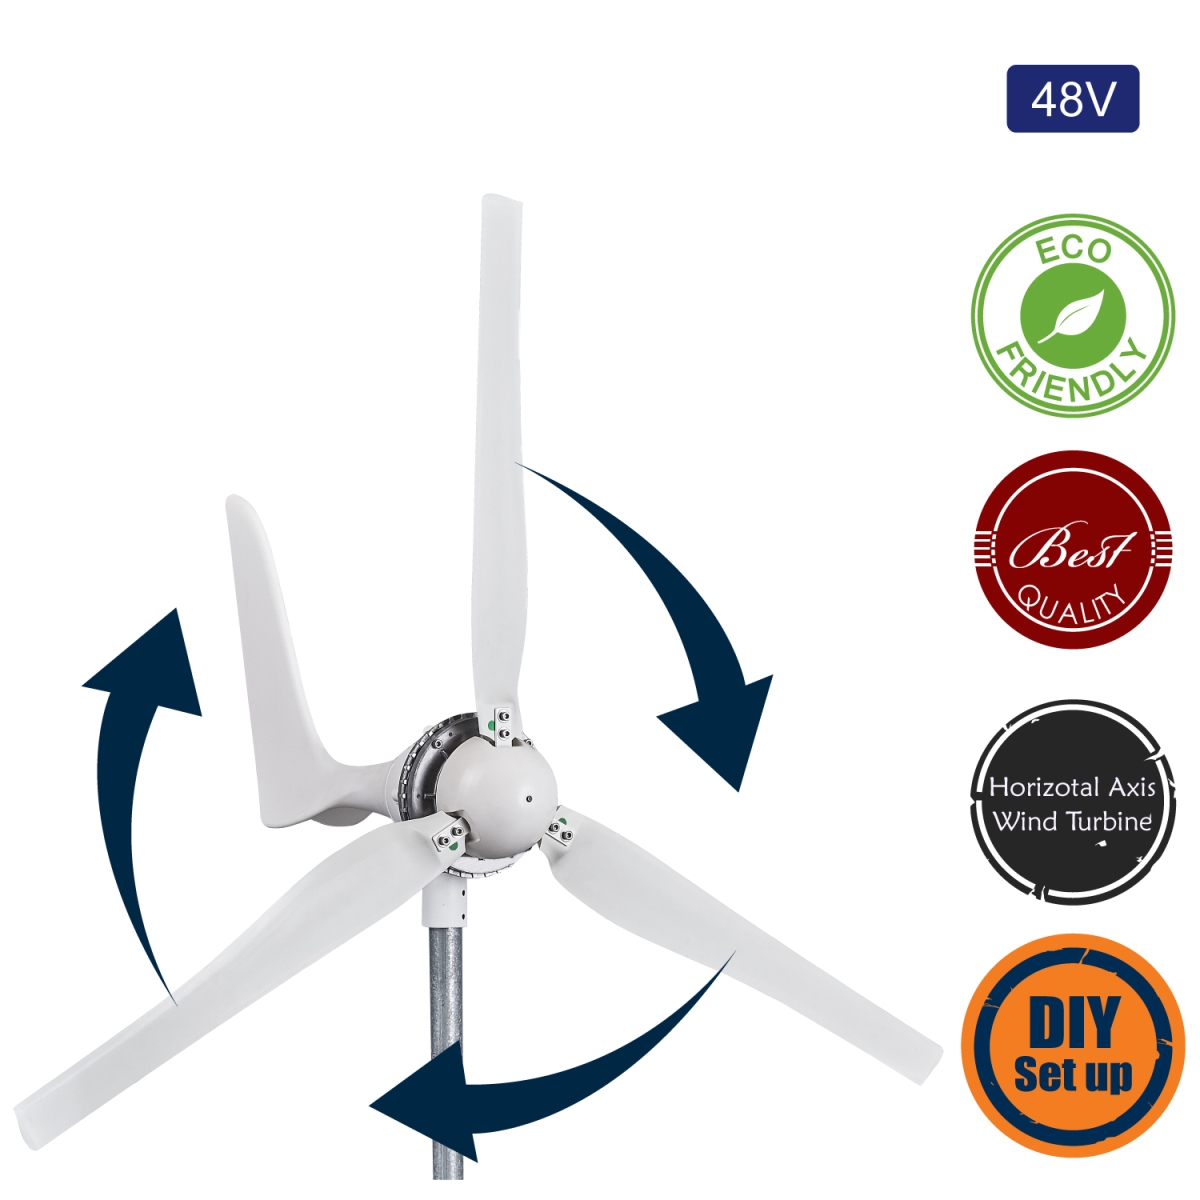 Da1200a9cc Windmill 1200w 48v 21a Wind Turbine Generator Kit - White